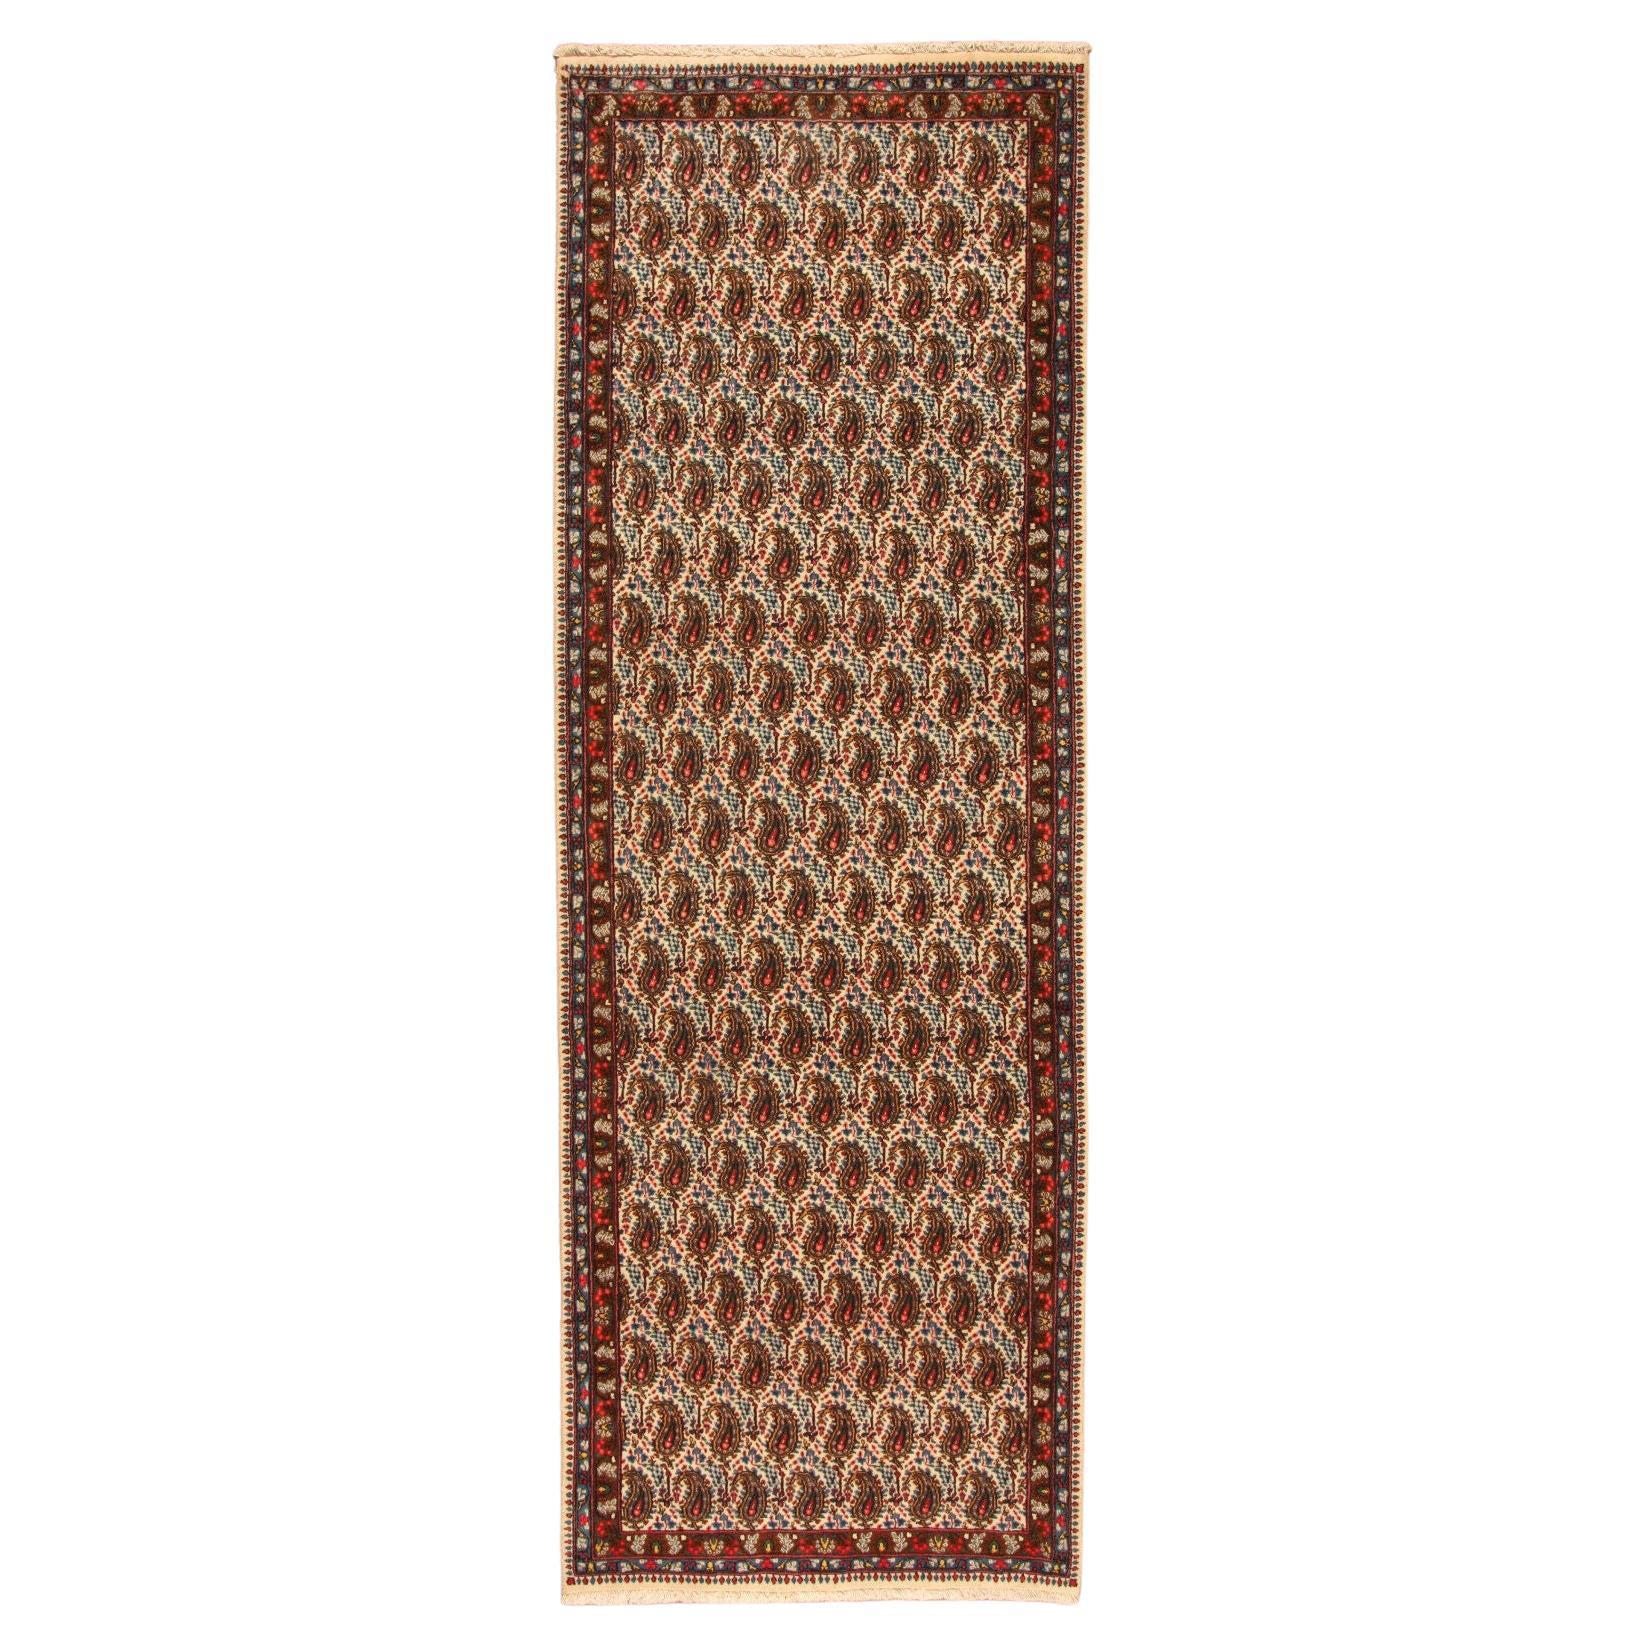 Handmade Vintage Persian Style Senneh Runner Rug 3.4' x 10.1', 1970s - 1T43